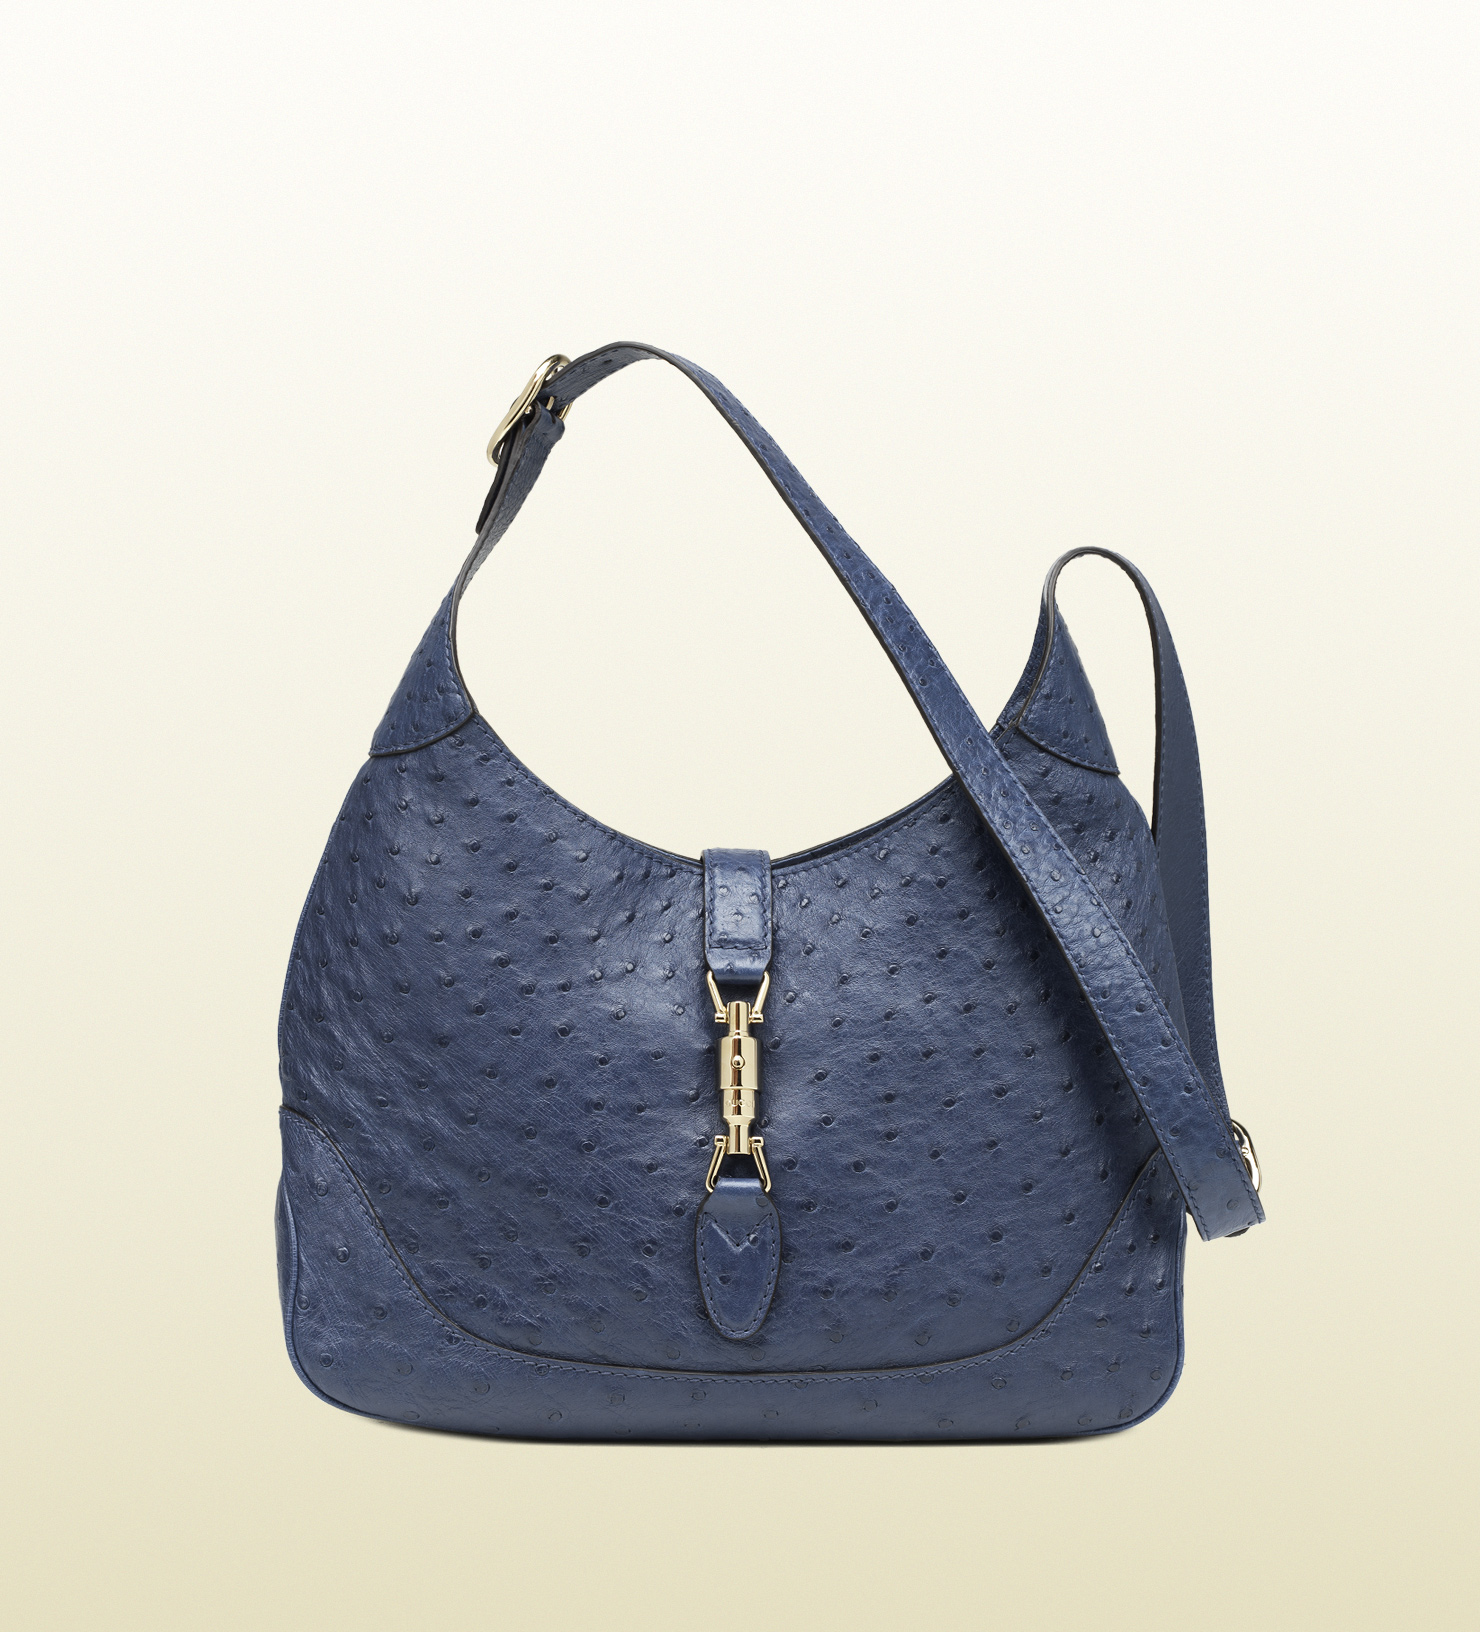 Gucci Jackie Ostrich Shoulder Bag in Blue - Lyst